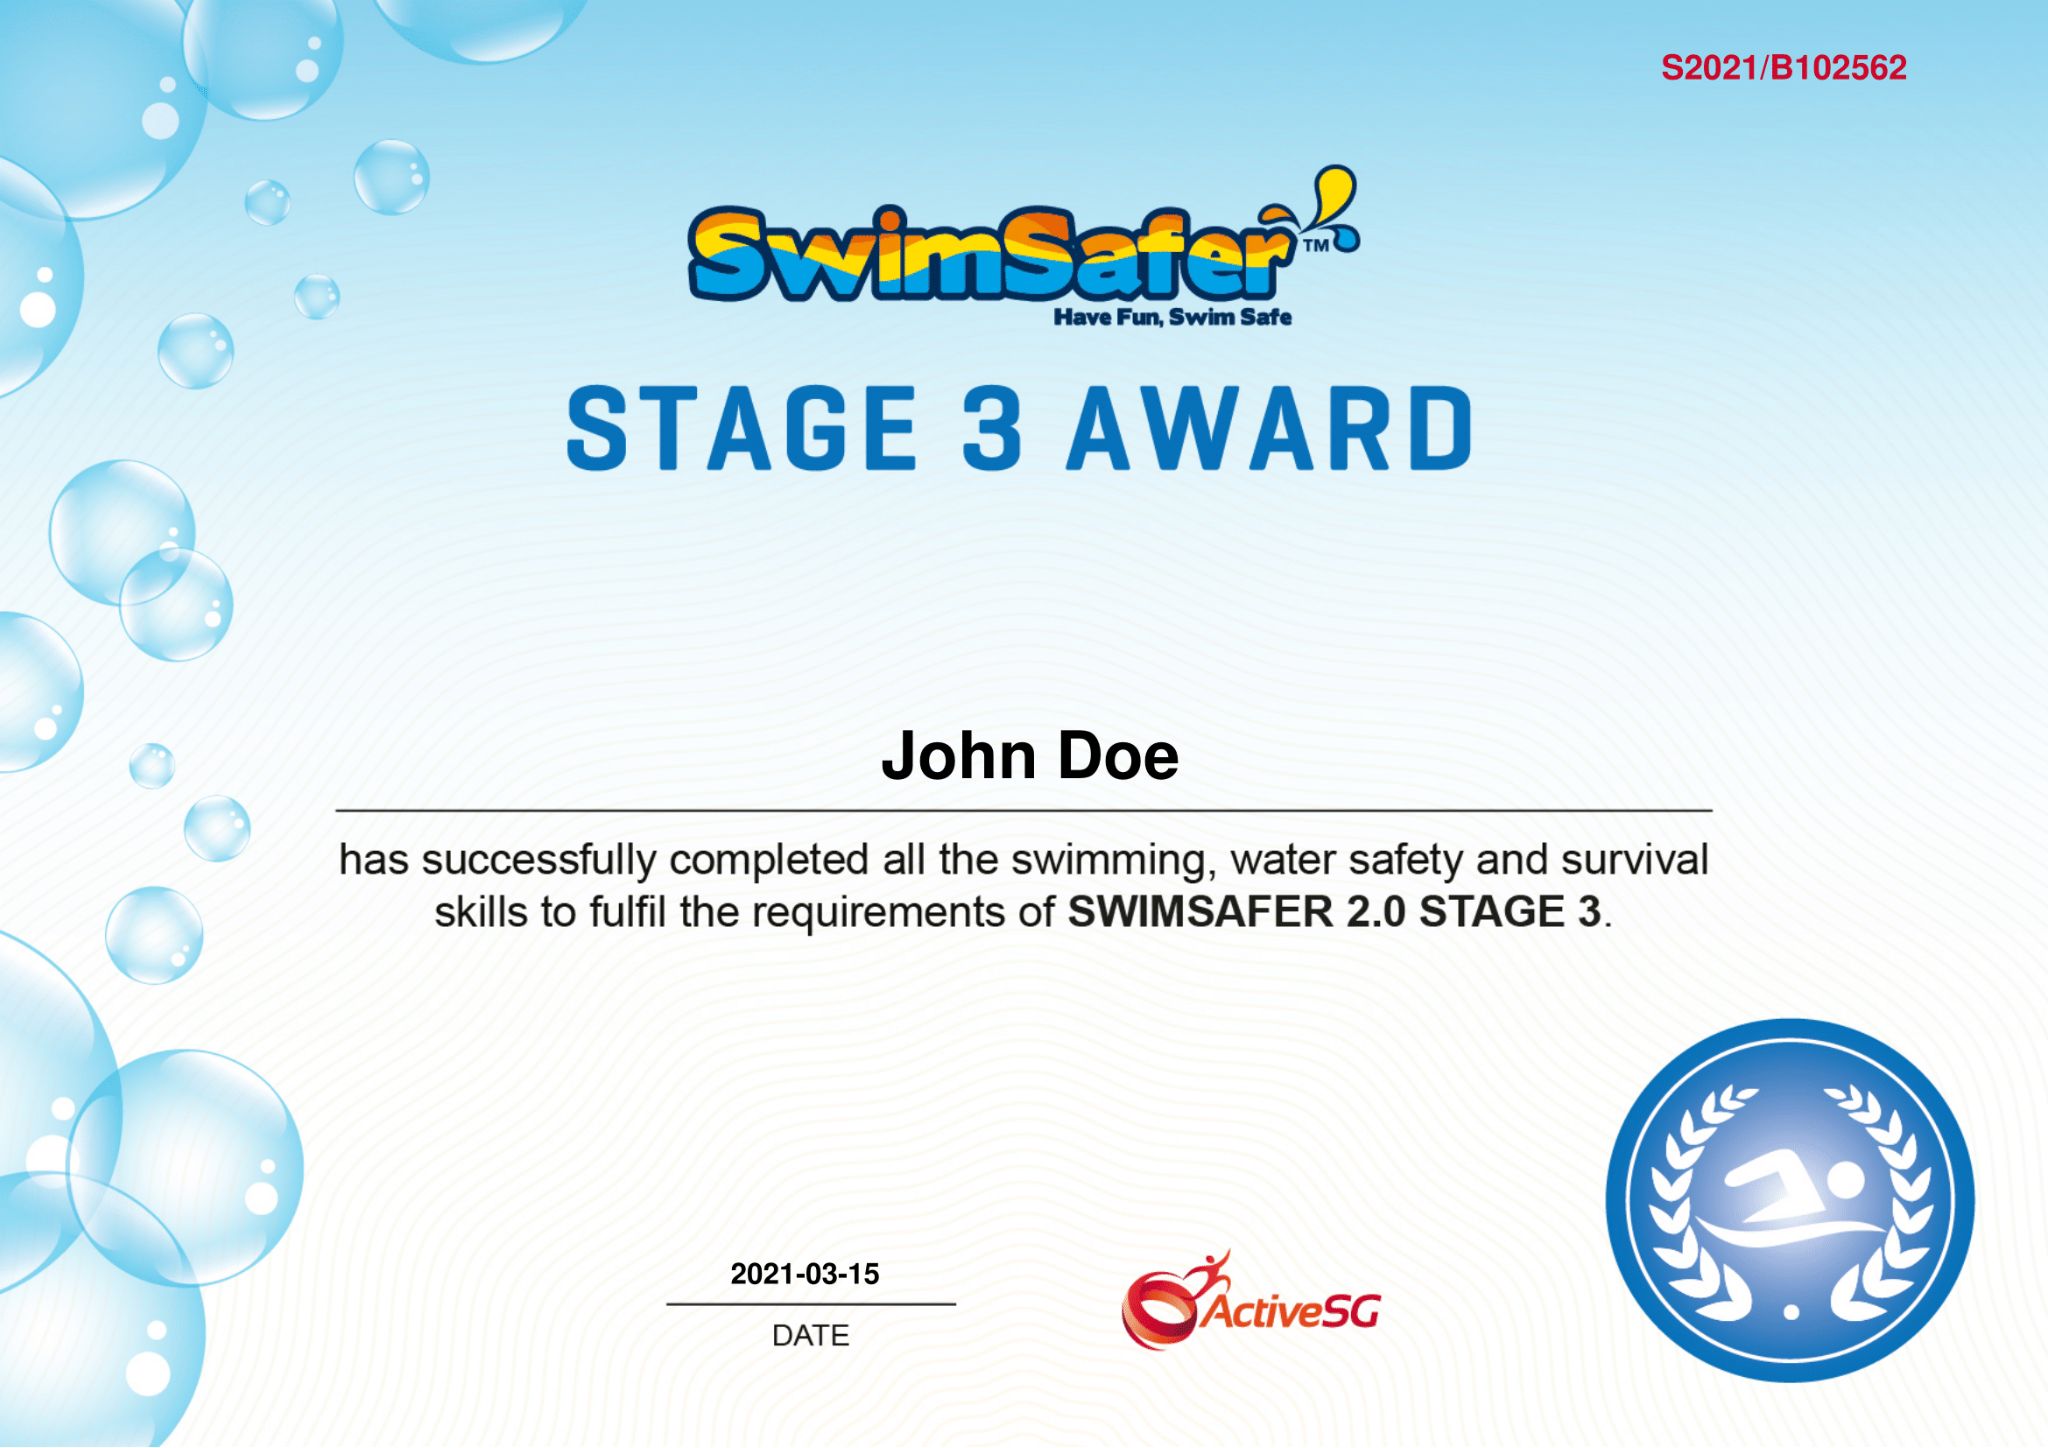 SwimSafer Stage 3